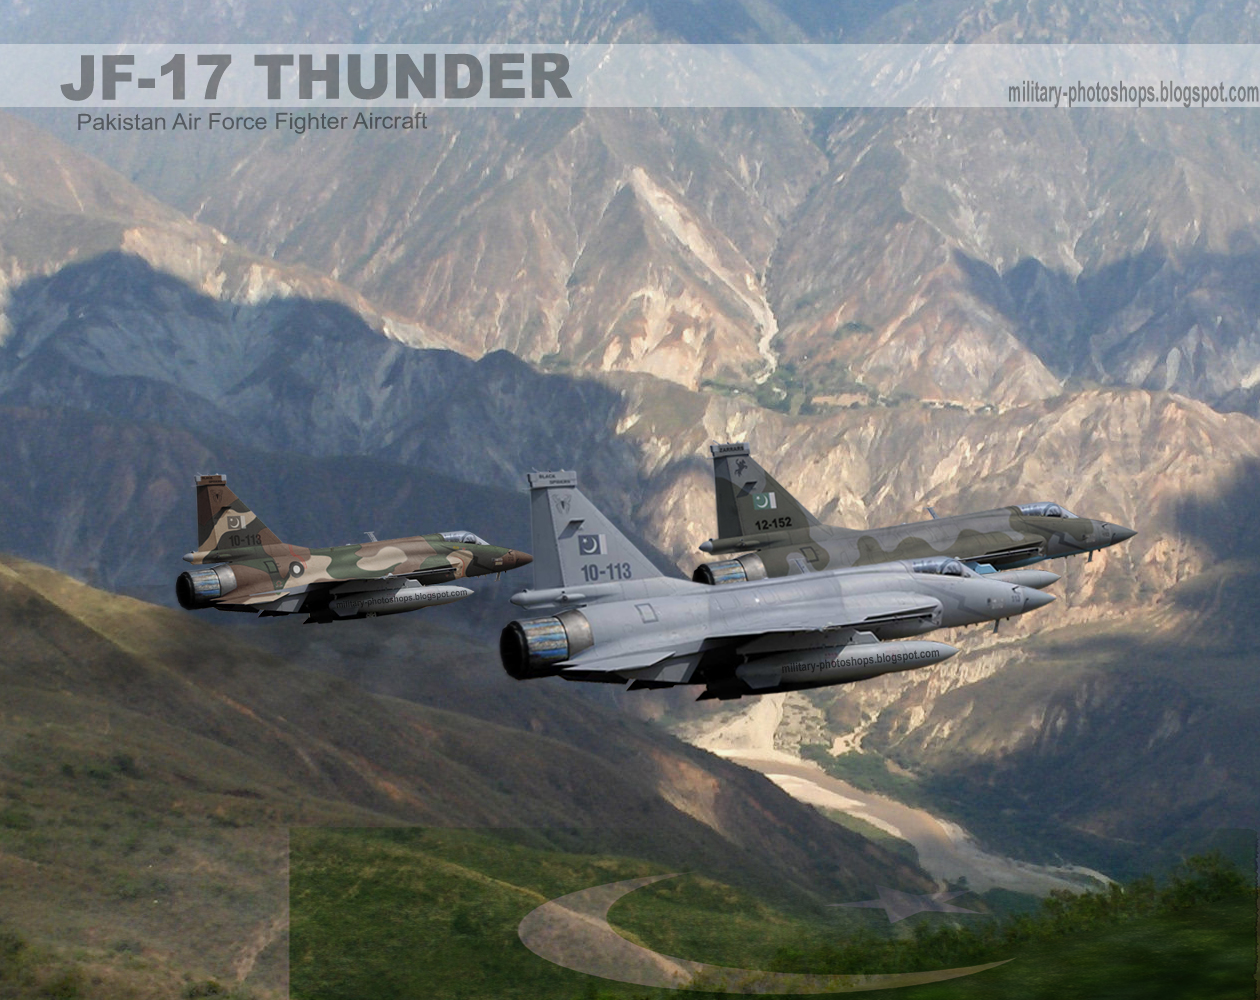  Photoshops Pakistan Air Force JF 17 Thunder Wallpaper [HD] [1024x768